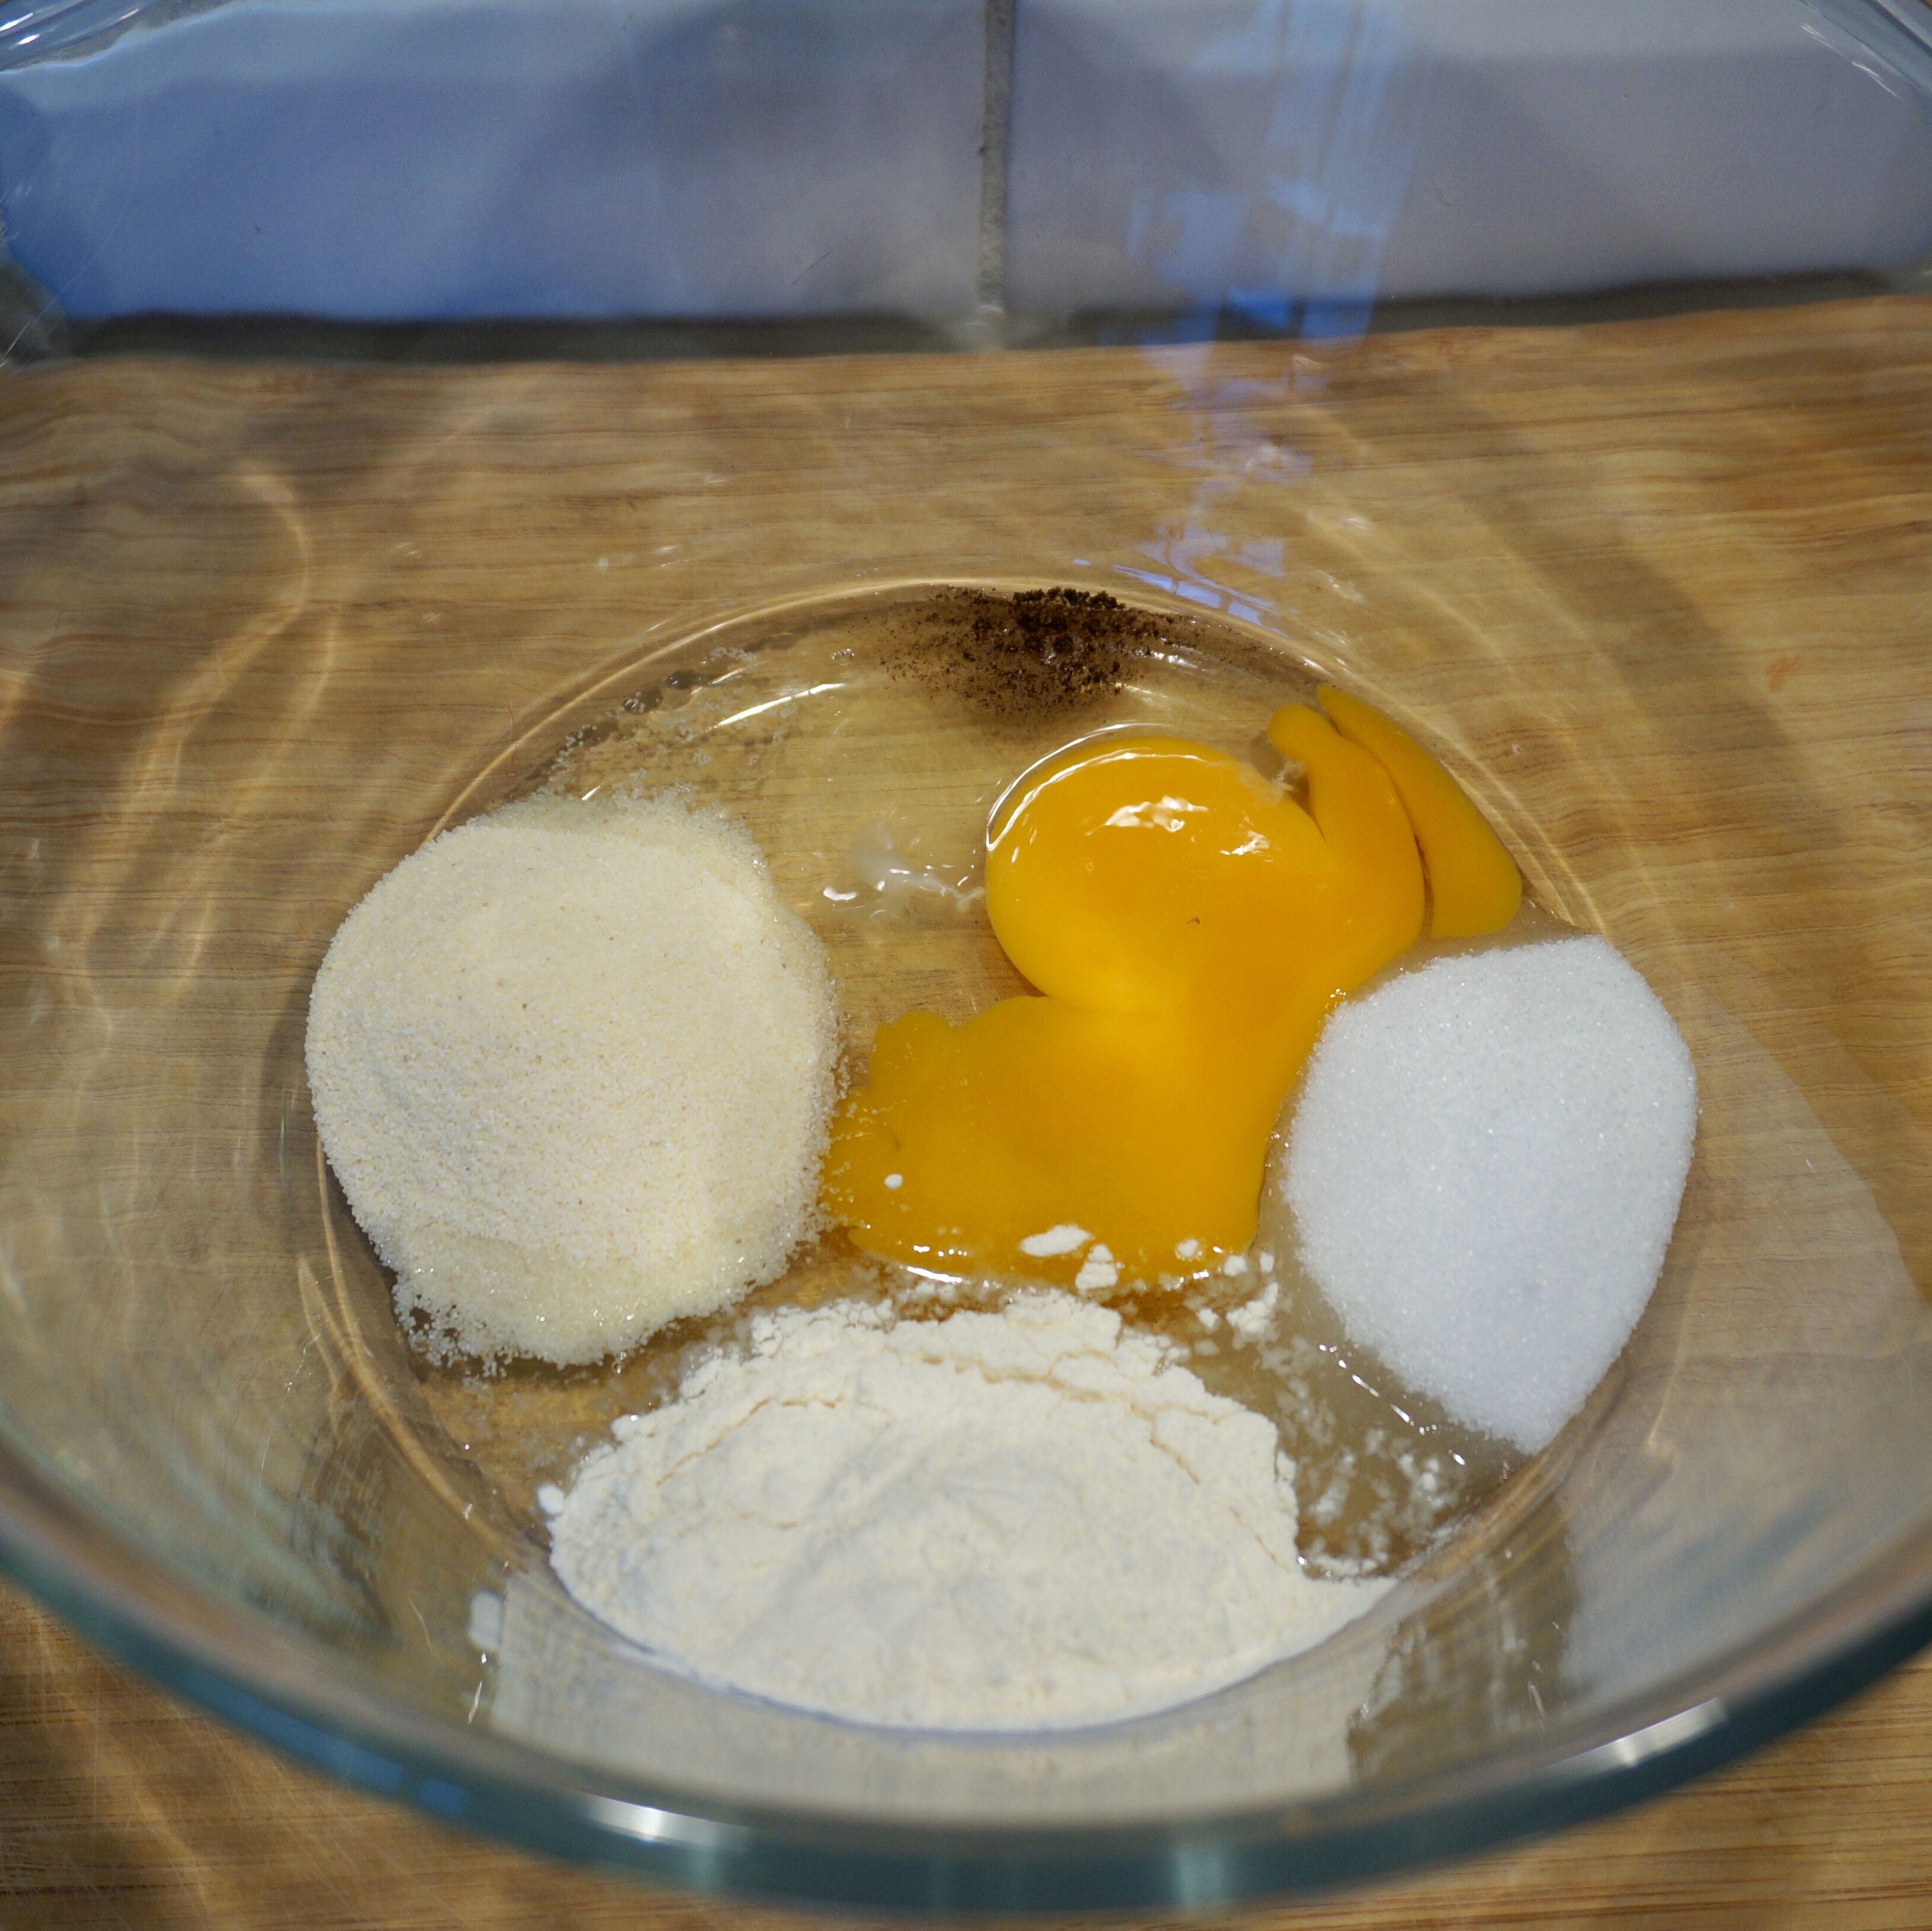 Mix the egg, wheat semolina, flour, vanilla, sugar in a bowl.